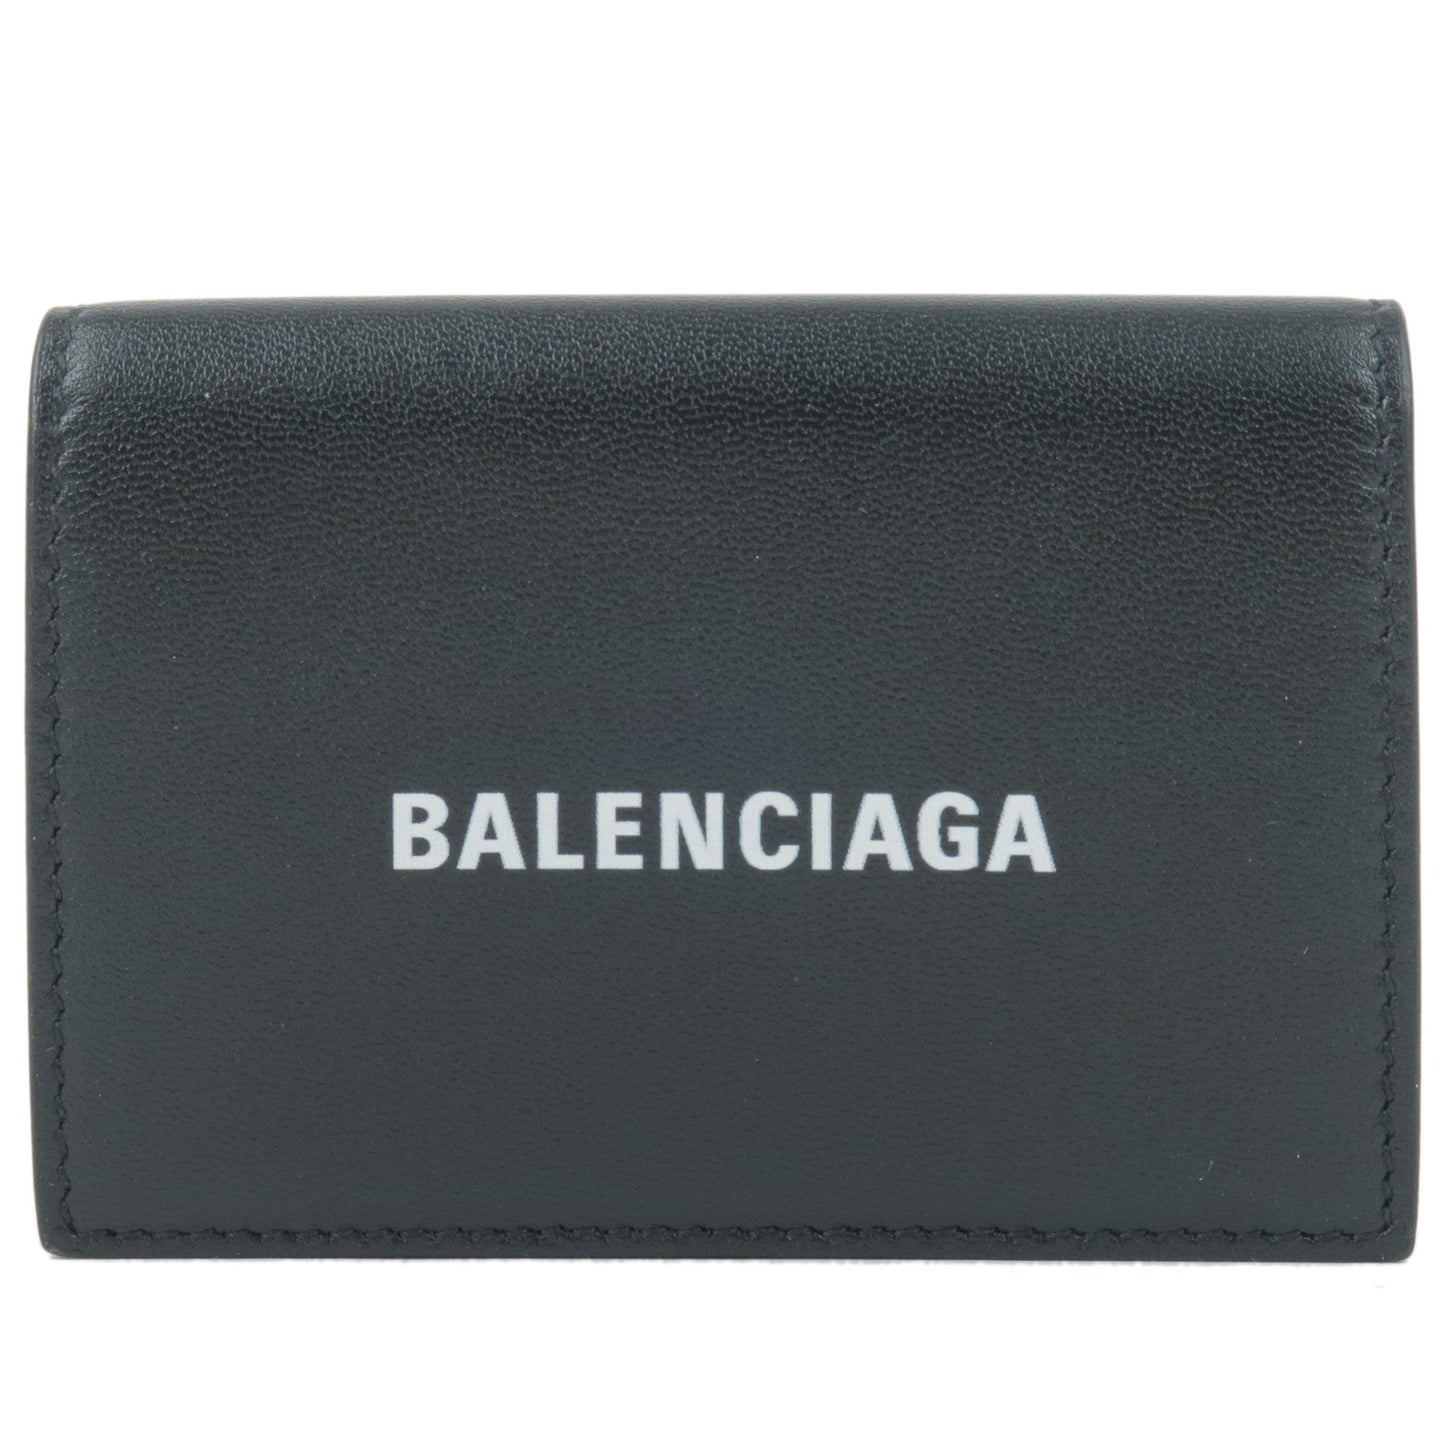 BALENCIAGA-Leather-Cash-Tri-Fold-Mini-Wallet-Black-594312